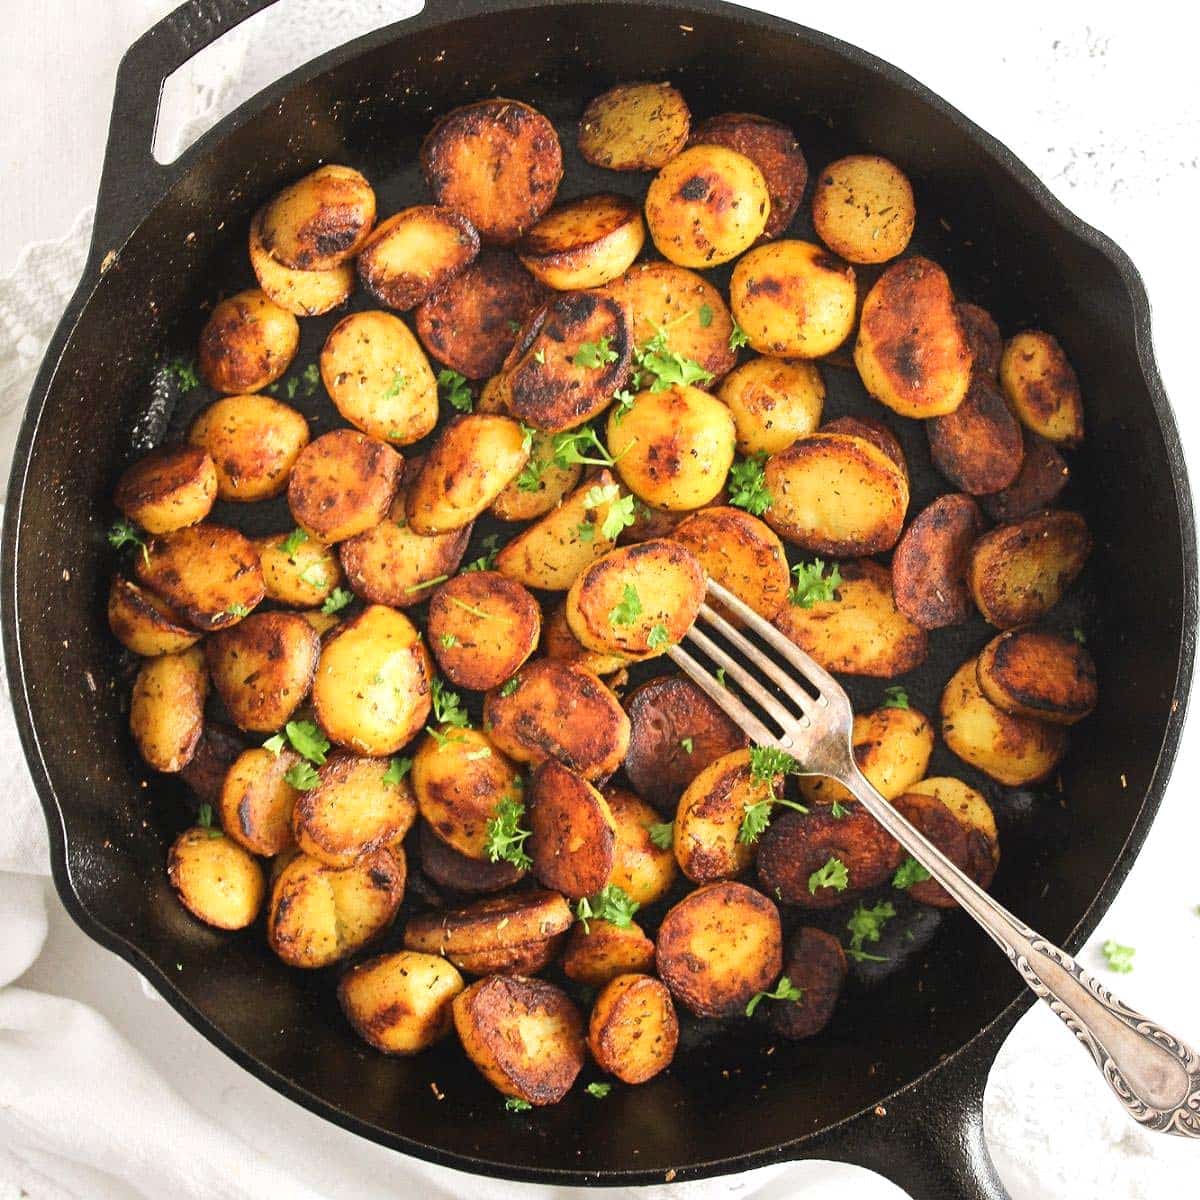 Cast-Iron Skillet Potatoes